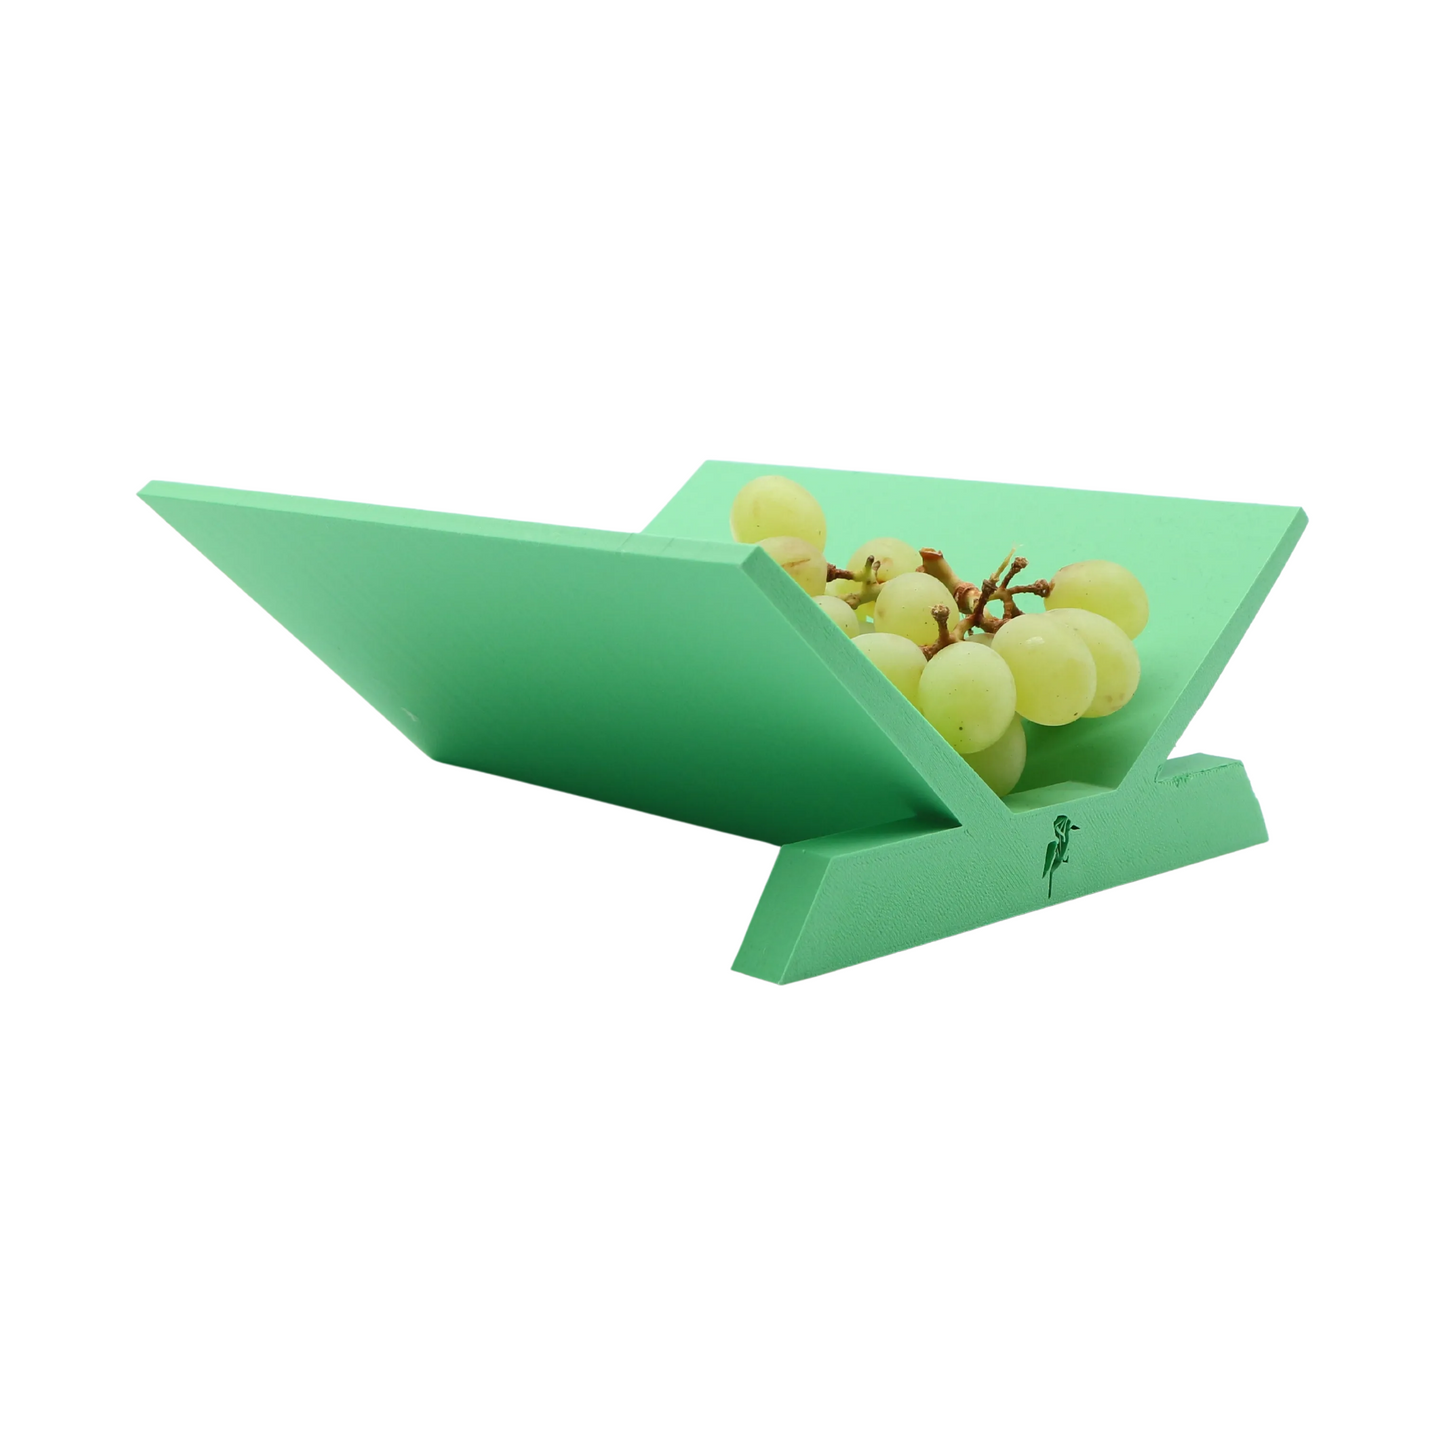 Merano design fruit bowl green edition